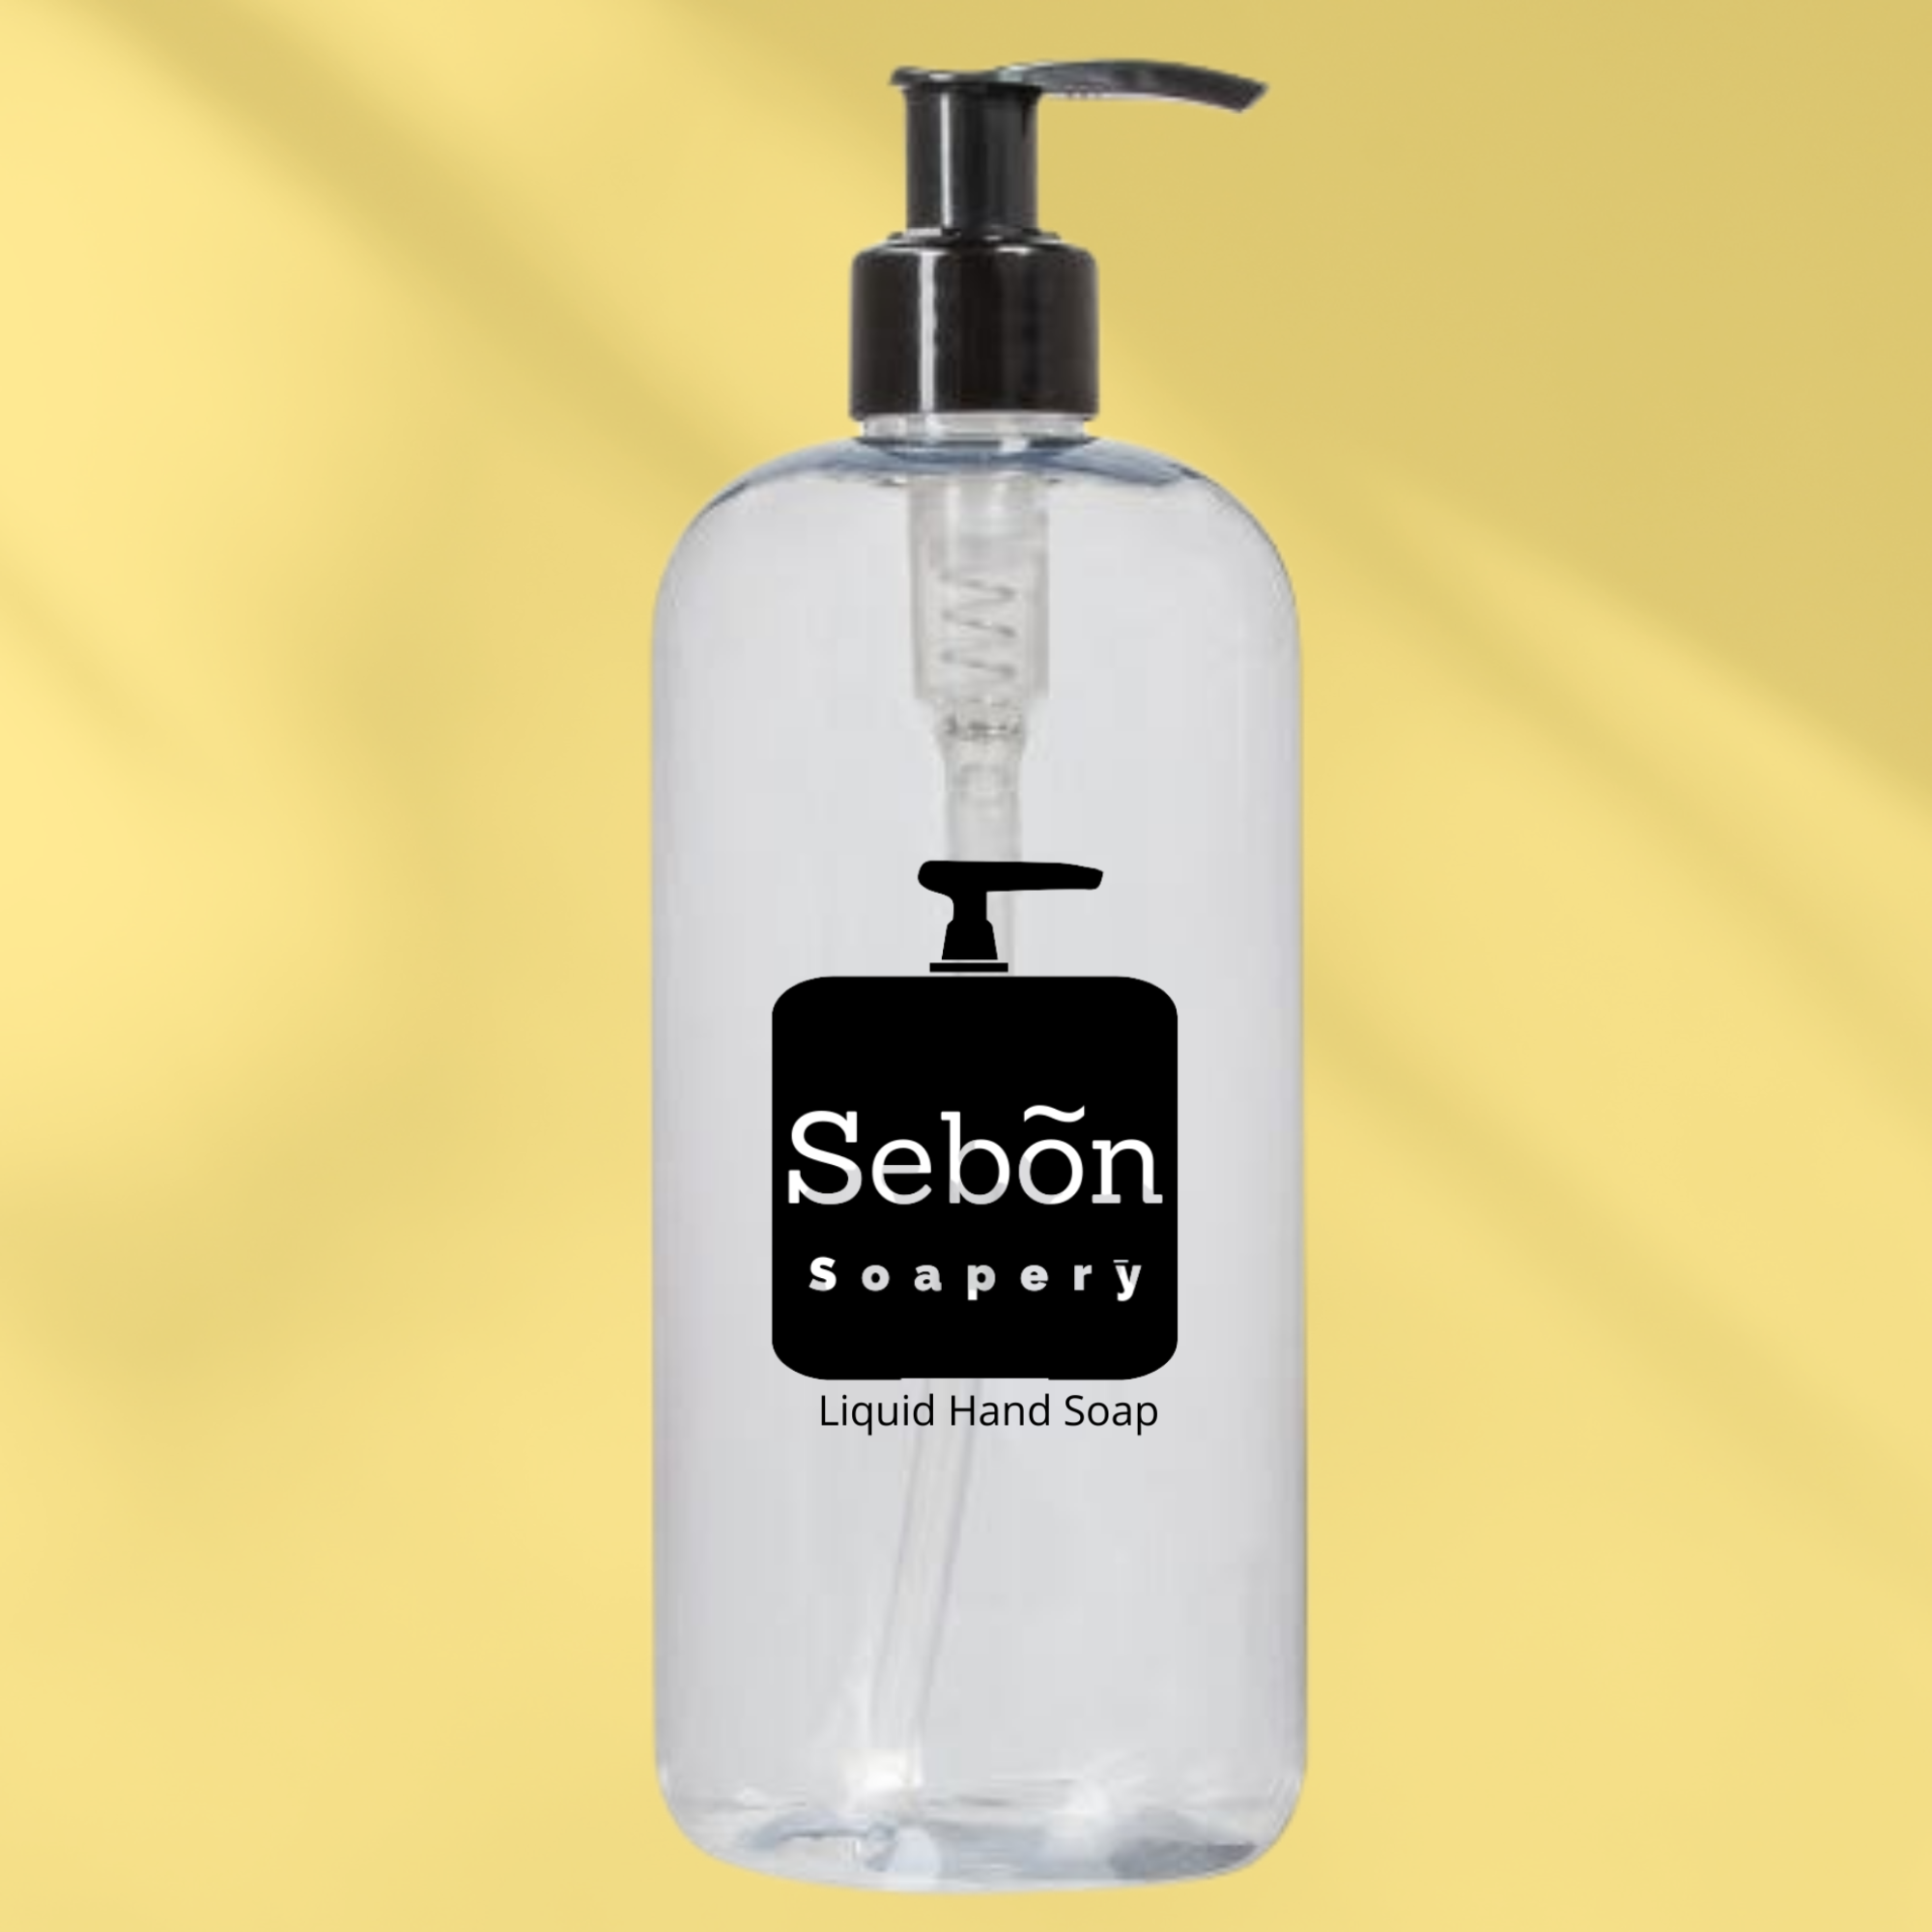 Sebon Lily & Peach Scented Liquid Hand Soap with Olive Oil